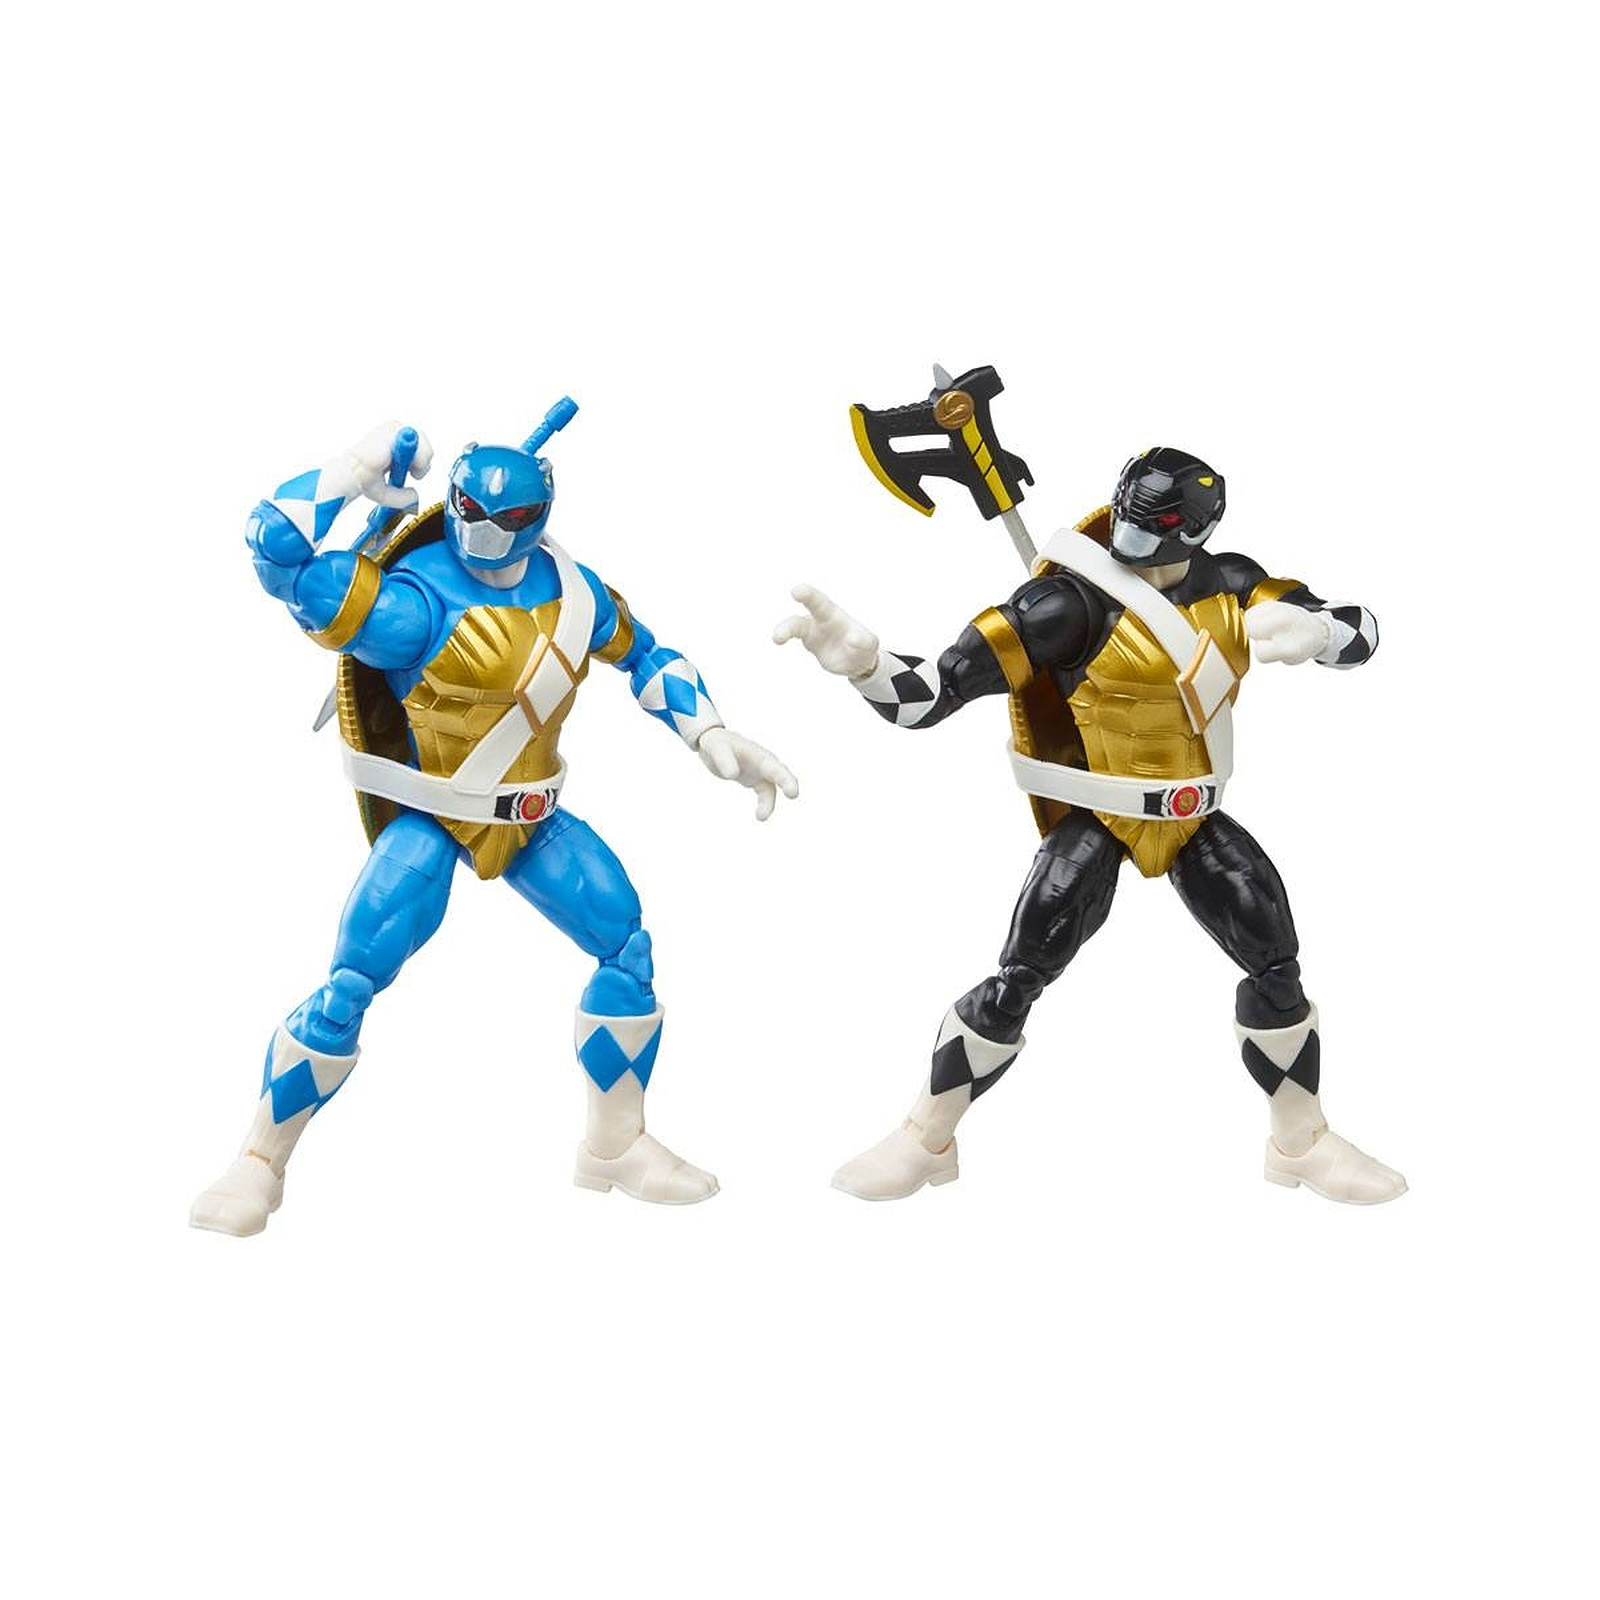 Power Rangers X TMNT Lightning Collection 2022 - Figurines Morphed Donatello & Morphed Leonardo - Figurines Hasbro